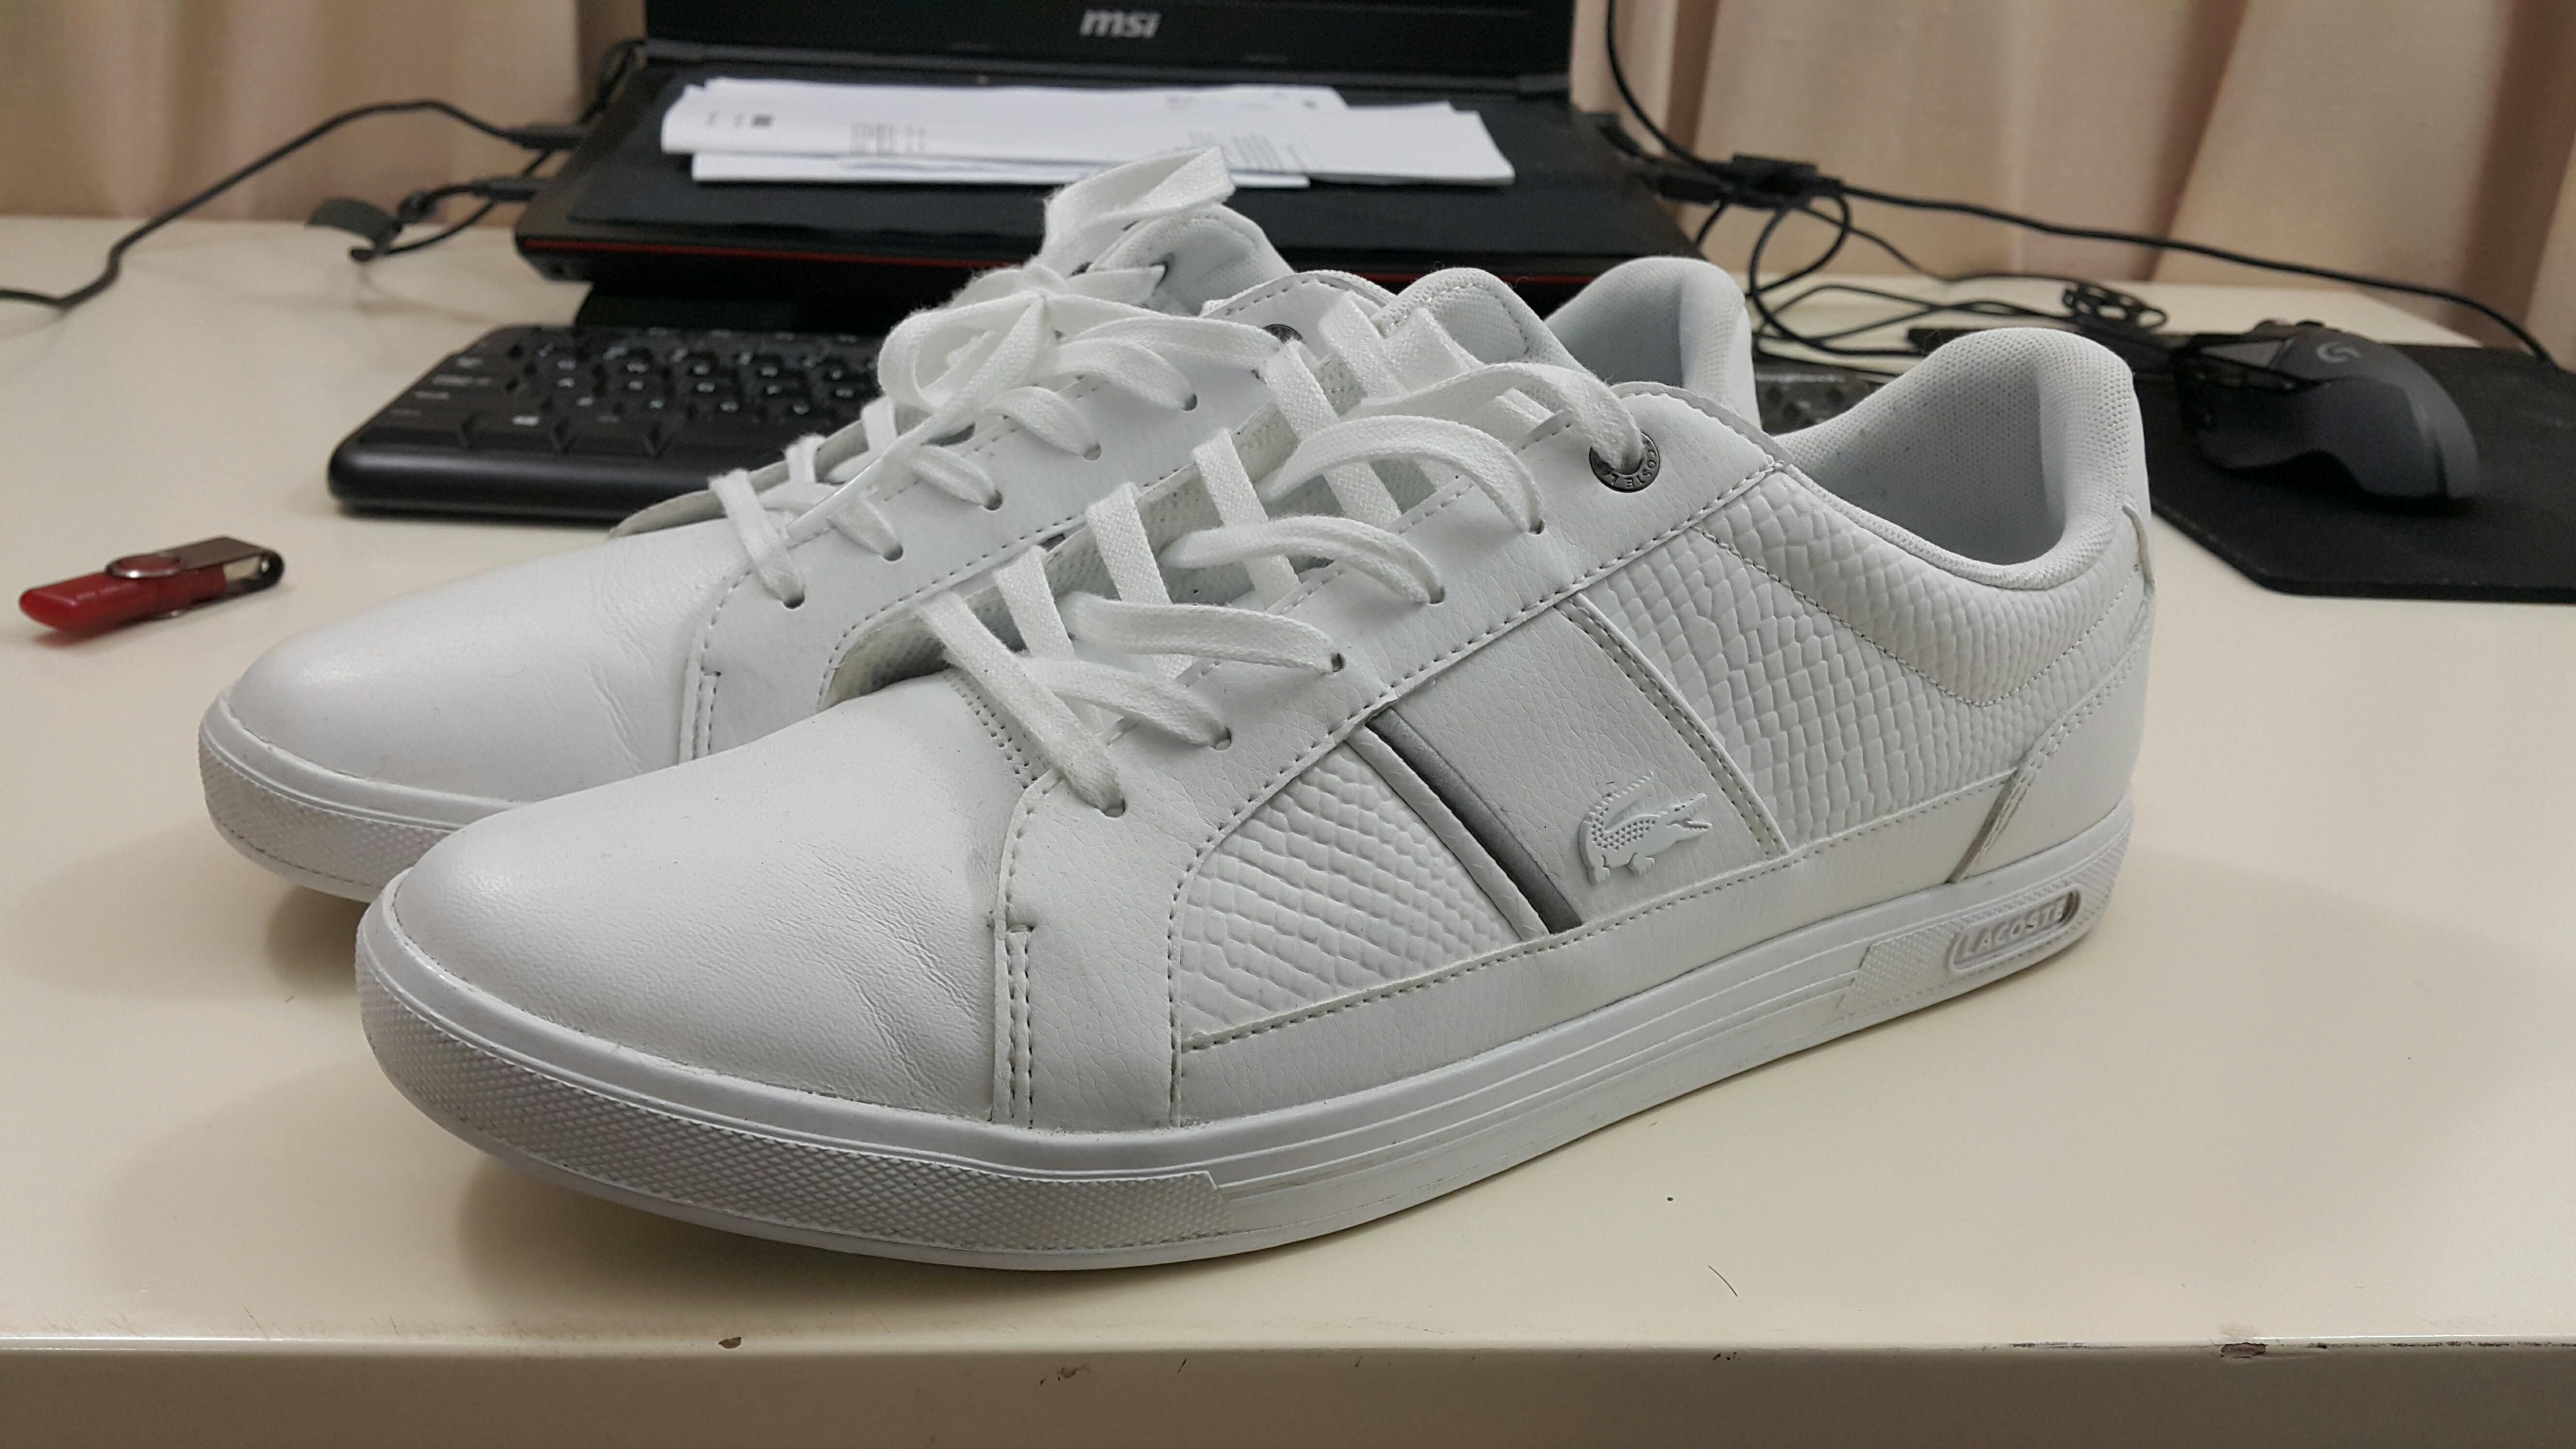 lacoste europa sneakers in white